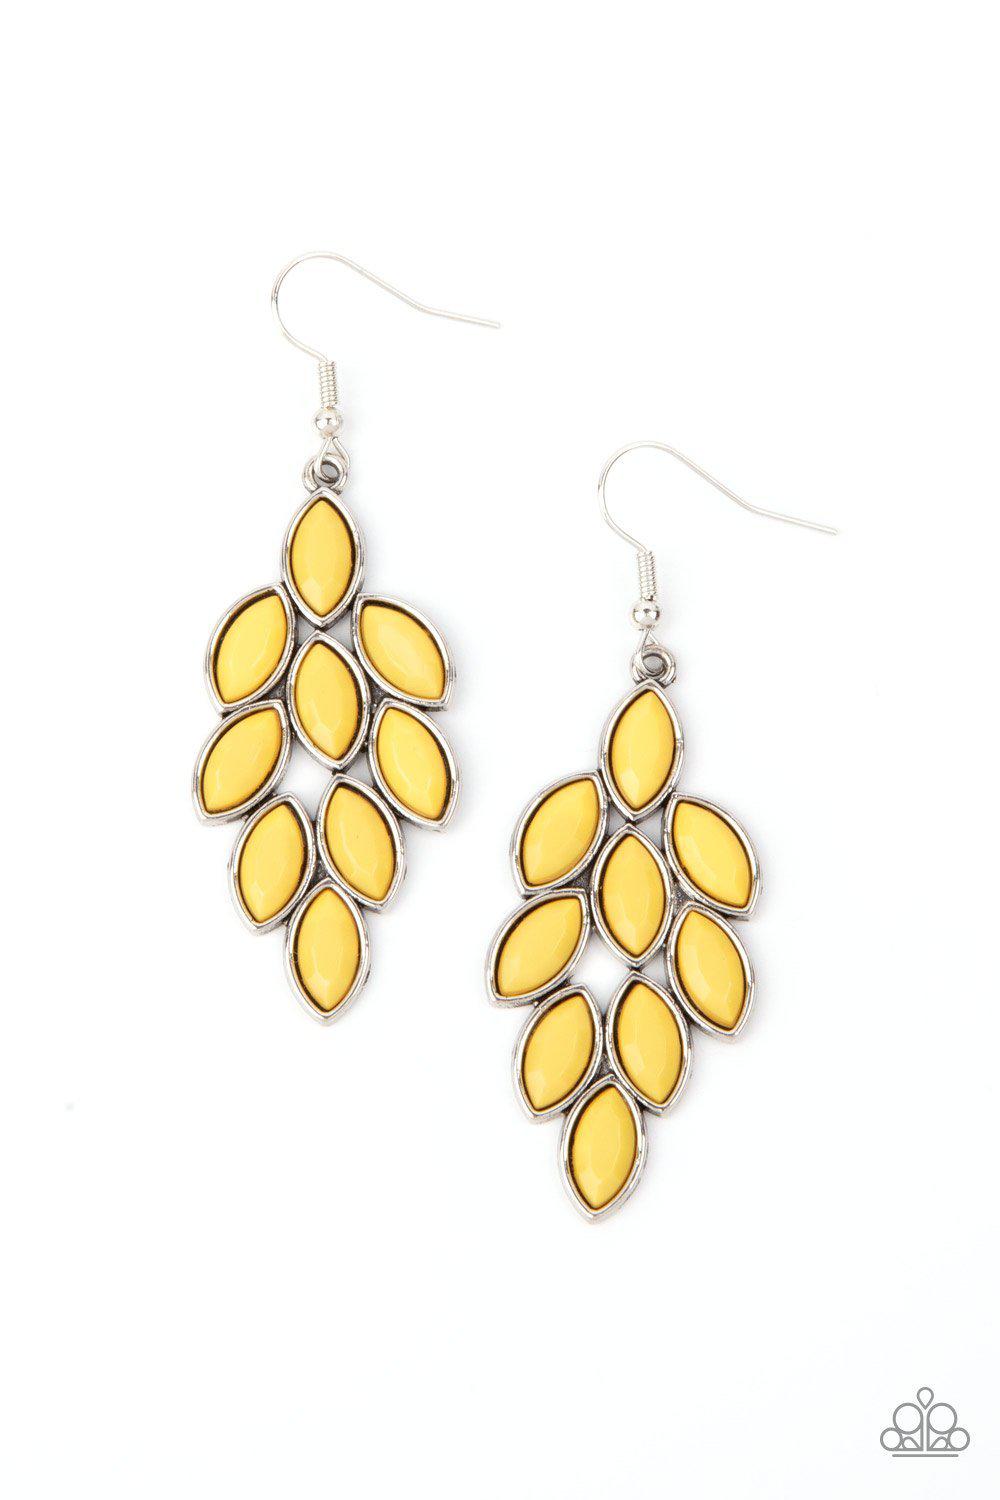 Flamboyant Foliage Yellow Earrings - Paparazzi Accessories- lightbox - CarasShop.com - $5 Jewelry by Cara Jewels